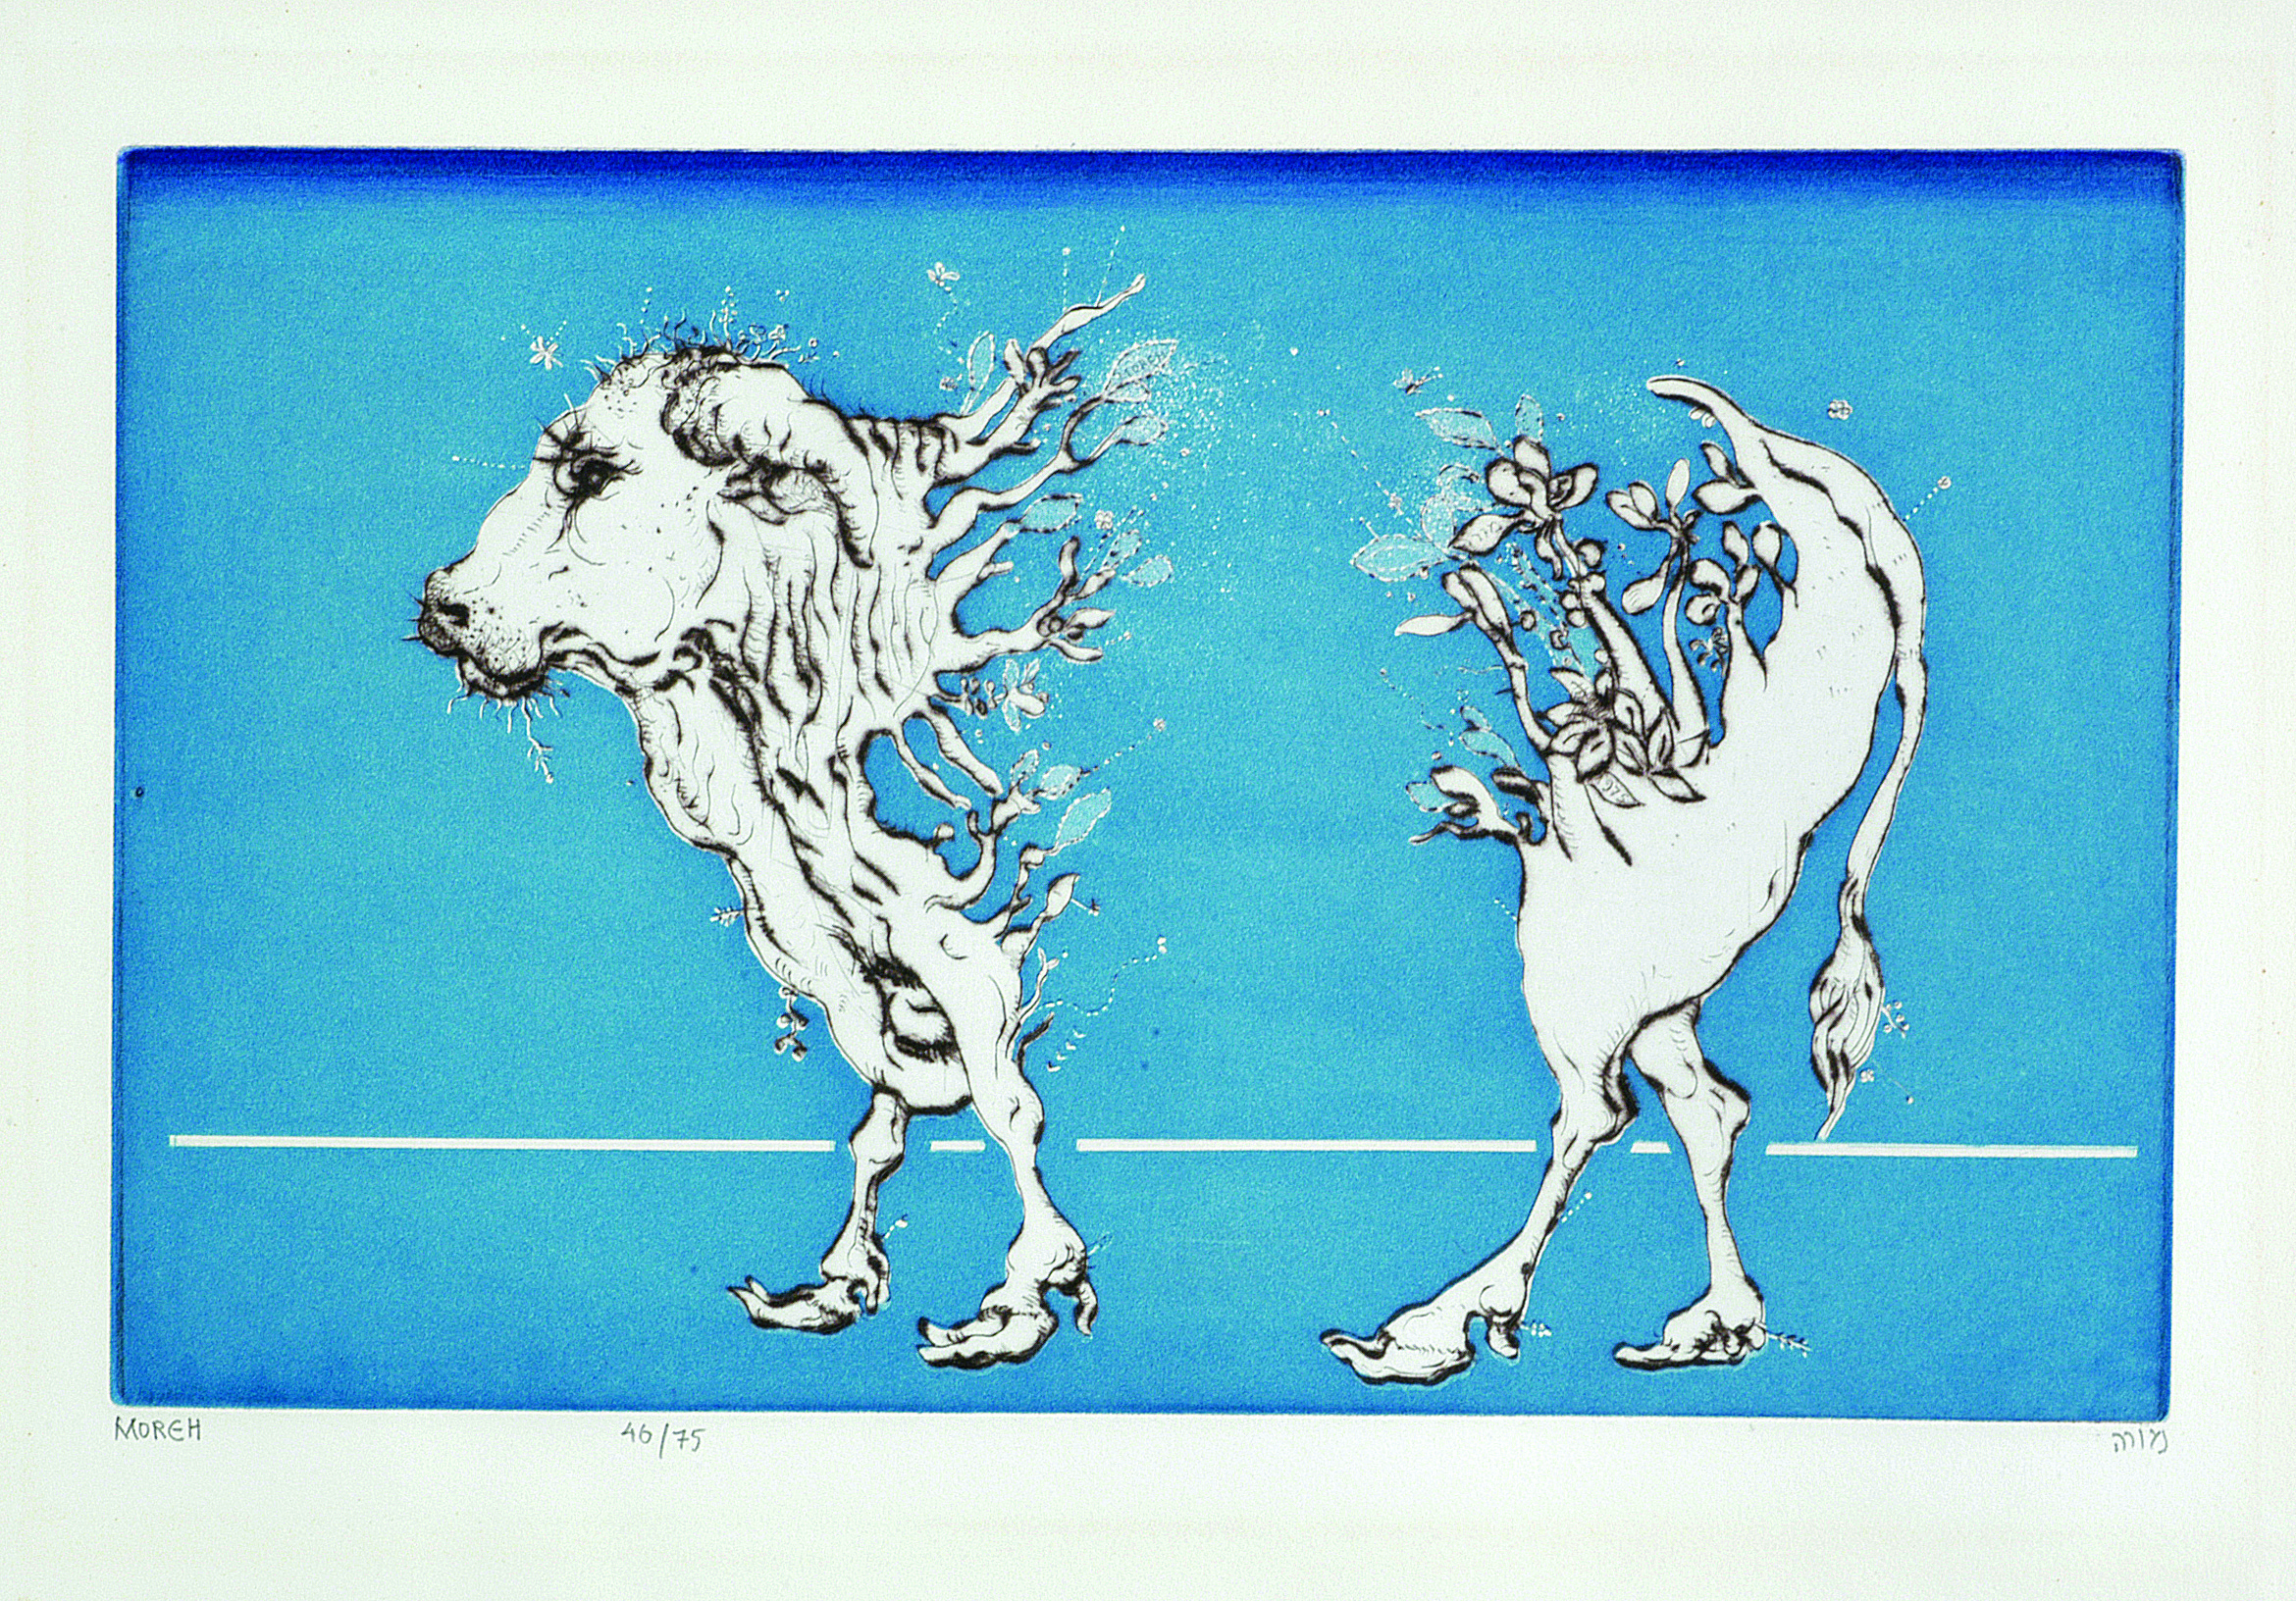 The Blue Bull by Mordechai Moreh